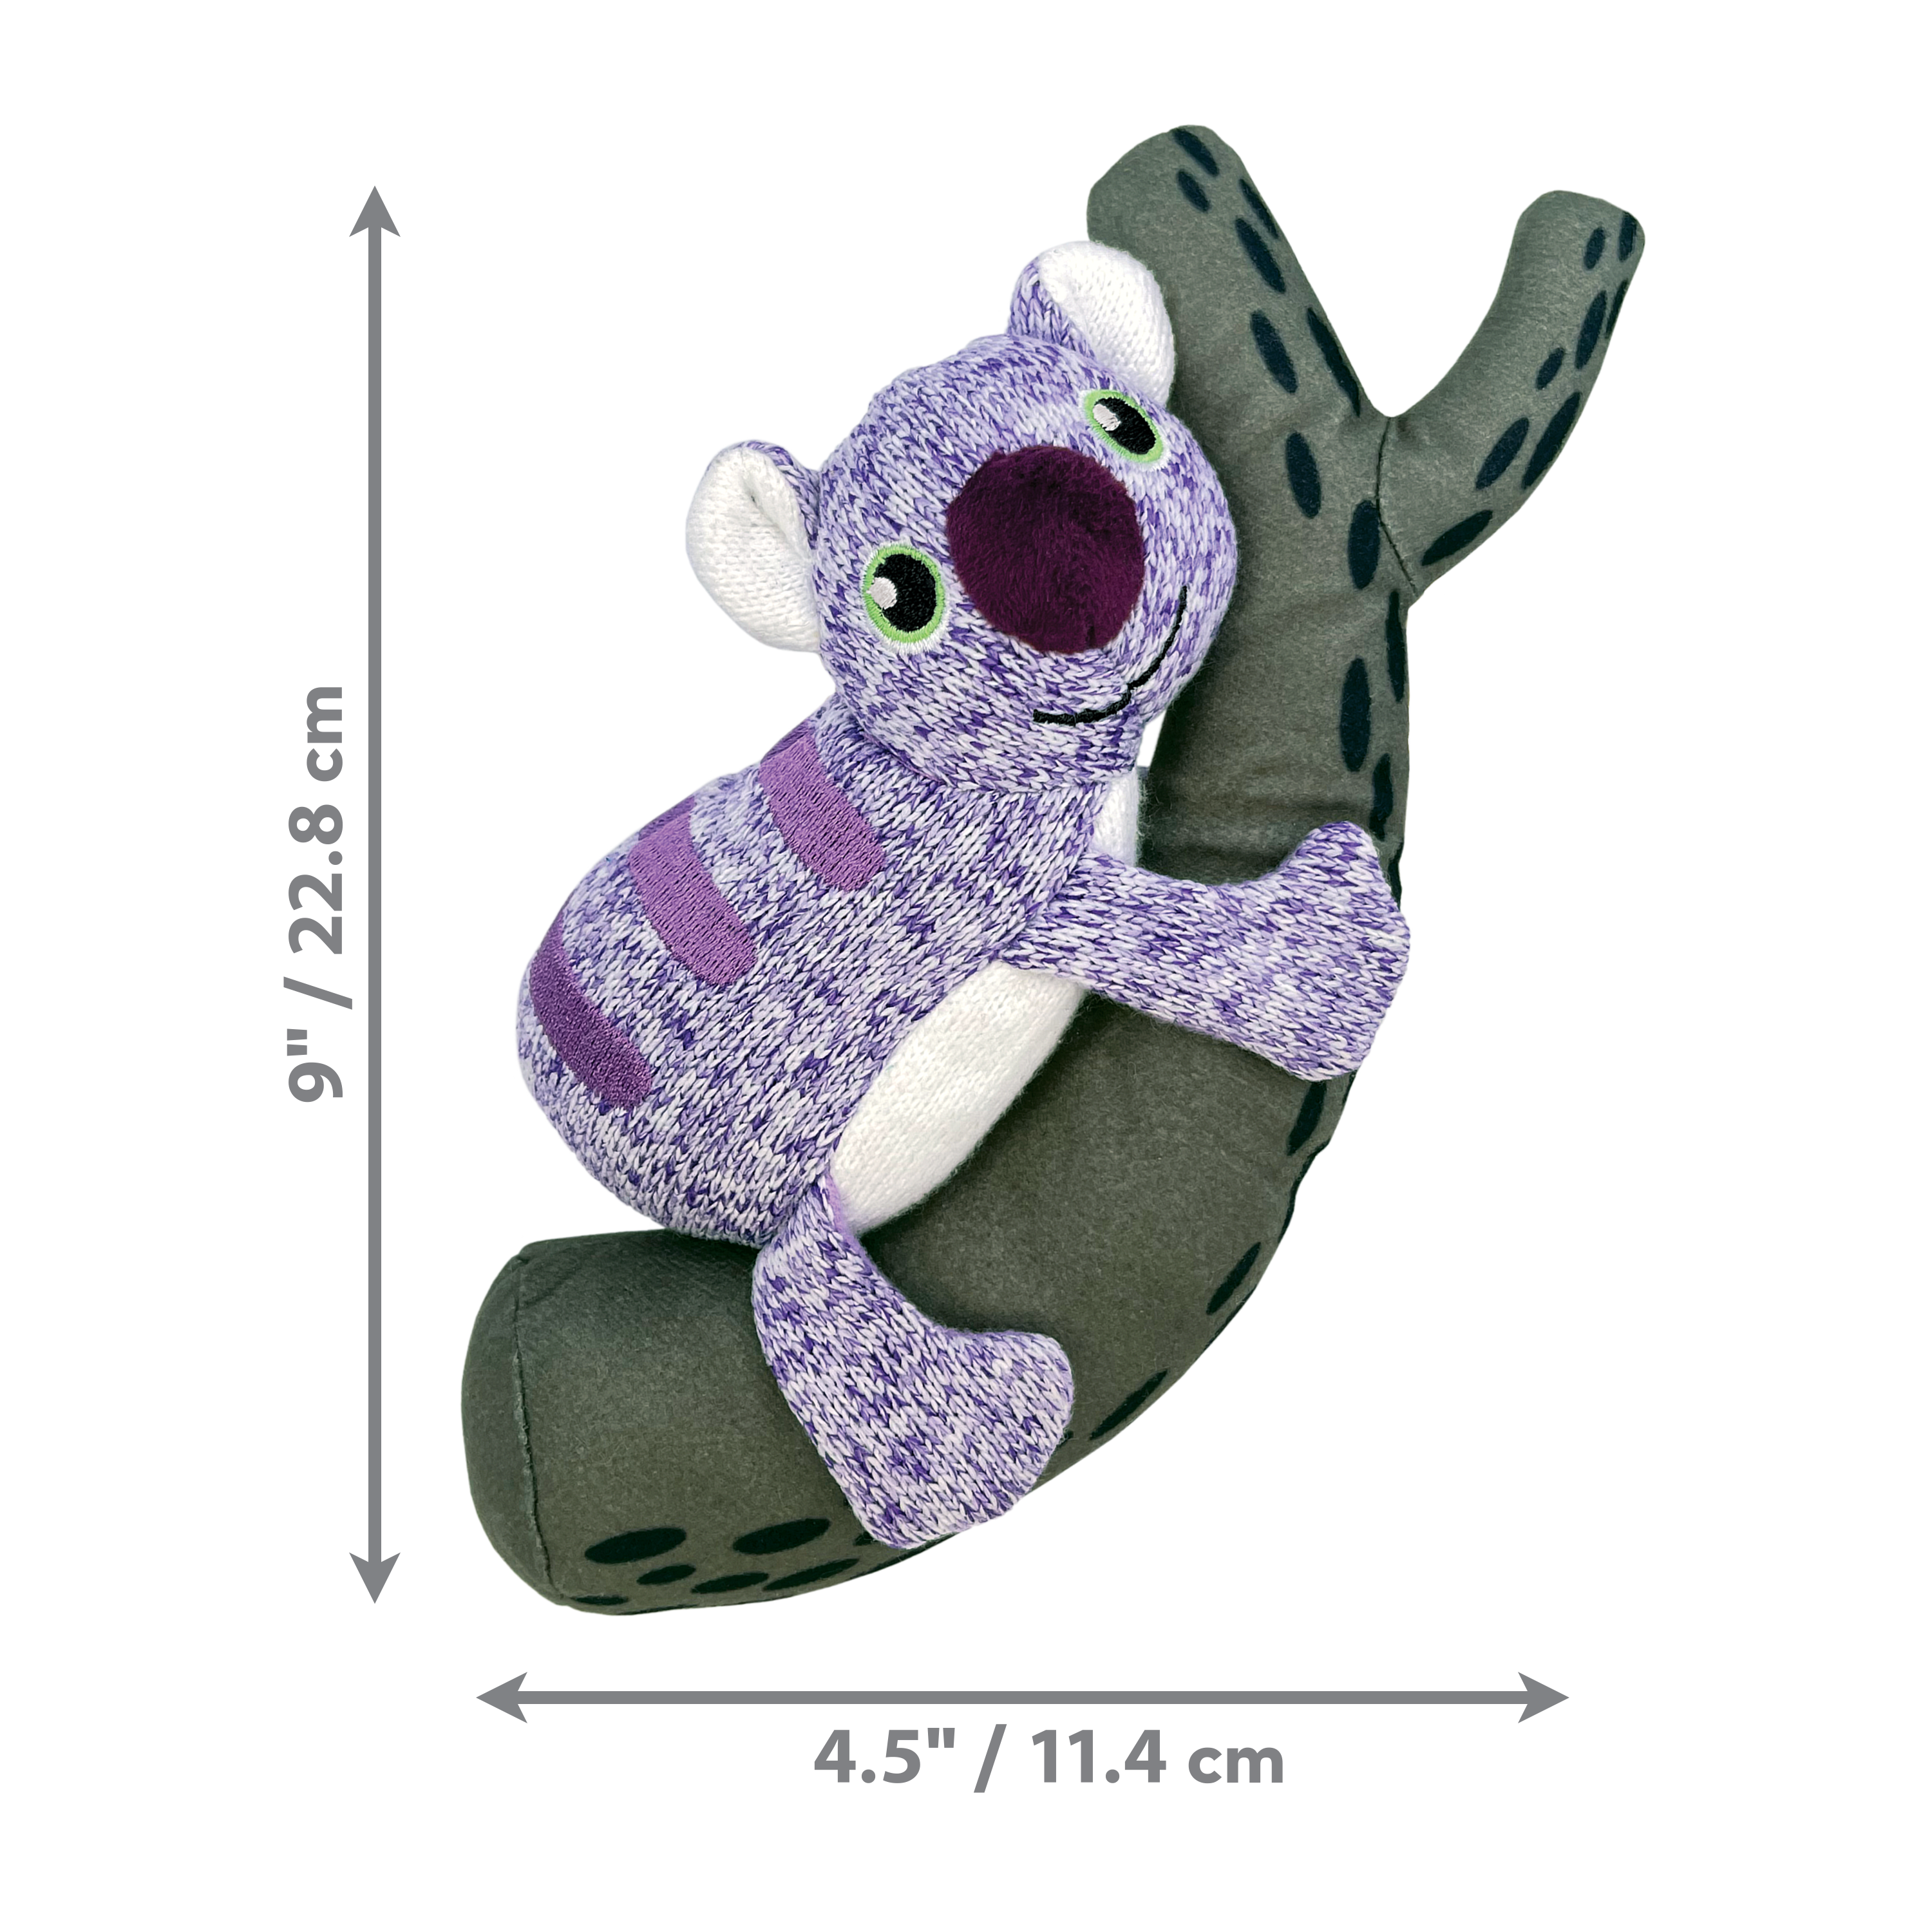 Imagem do produto Pull-A-Partz Pals Koala dimoffpack